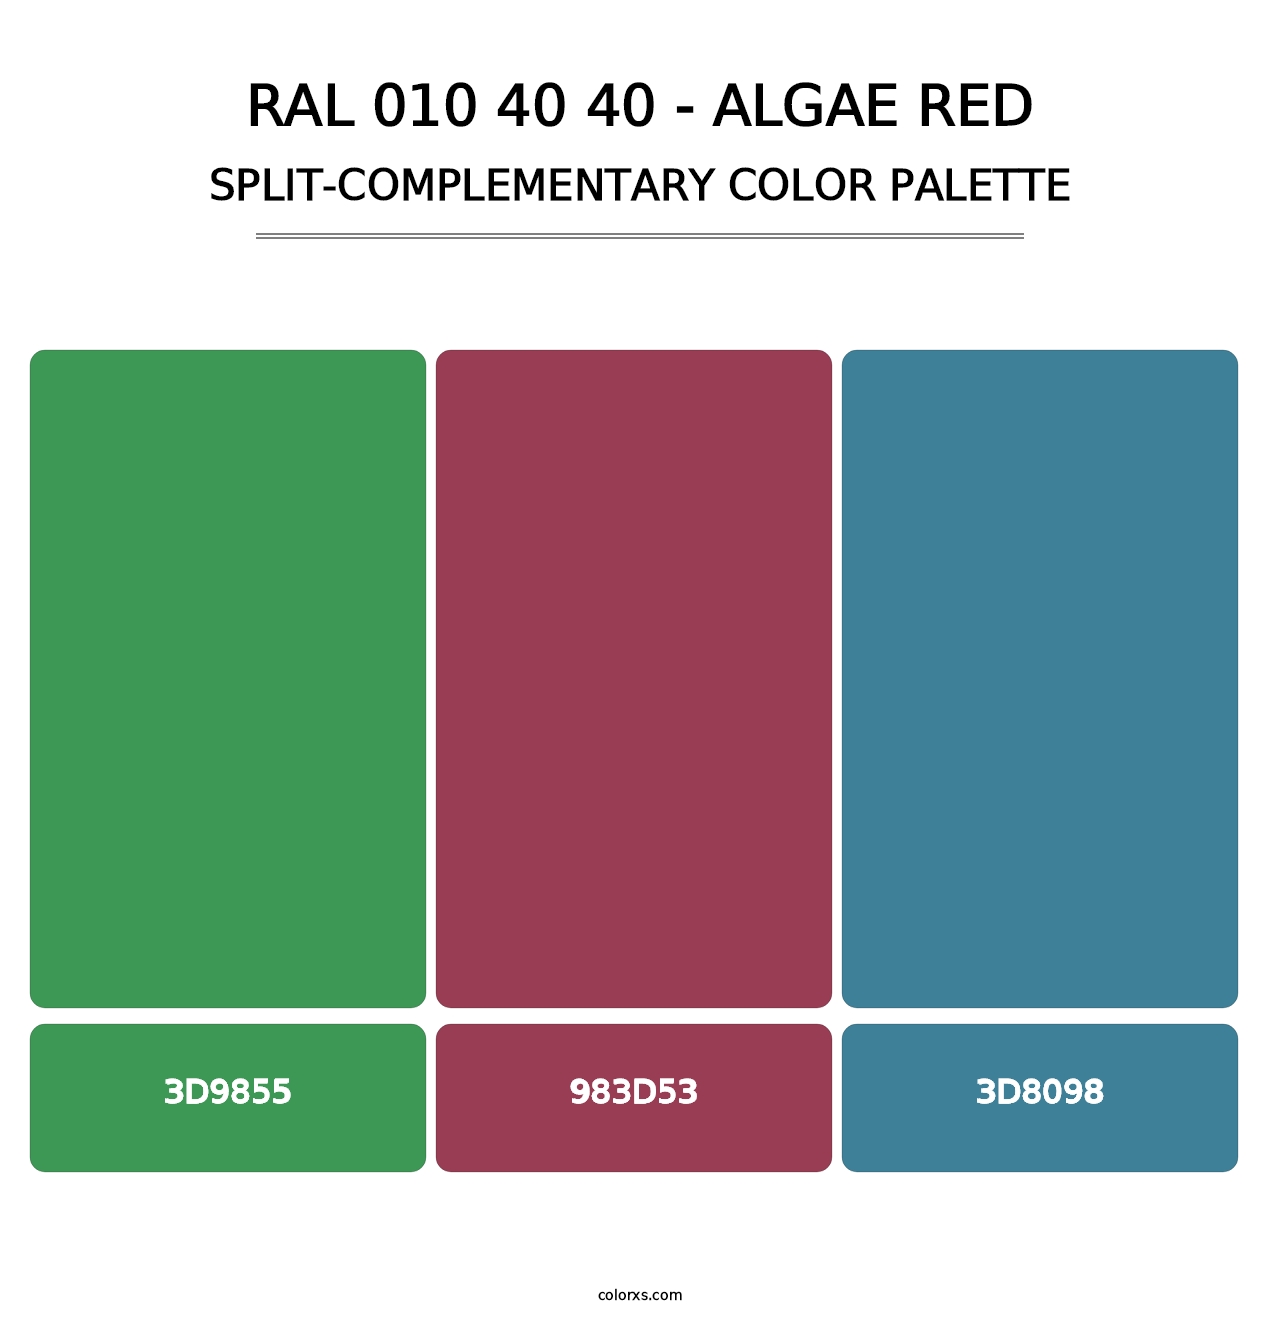 RAL 010 40 40 - Algae Red - Split-Complementary Color Palette